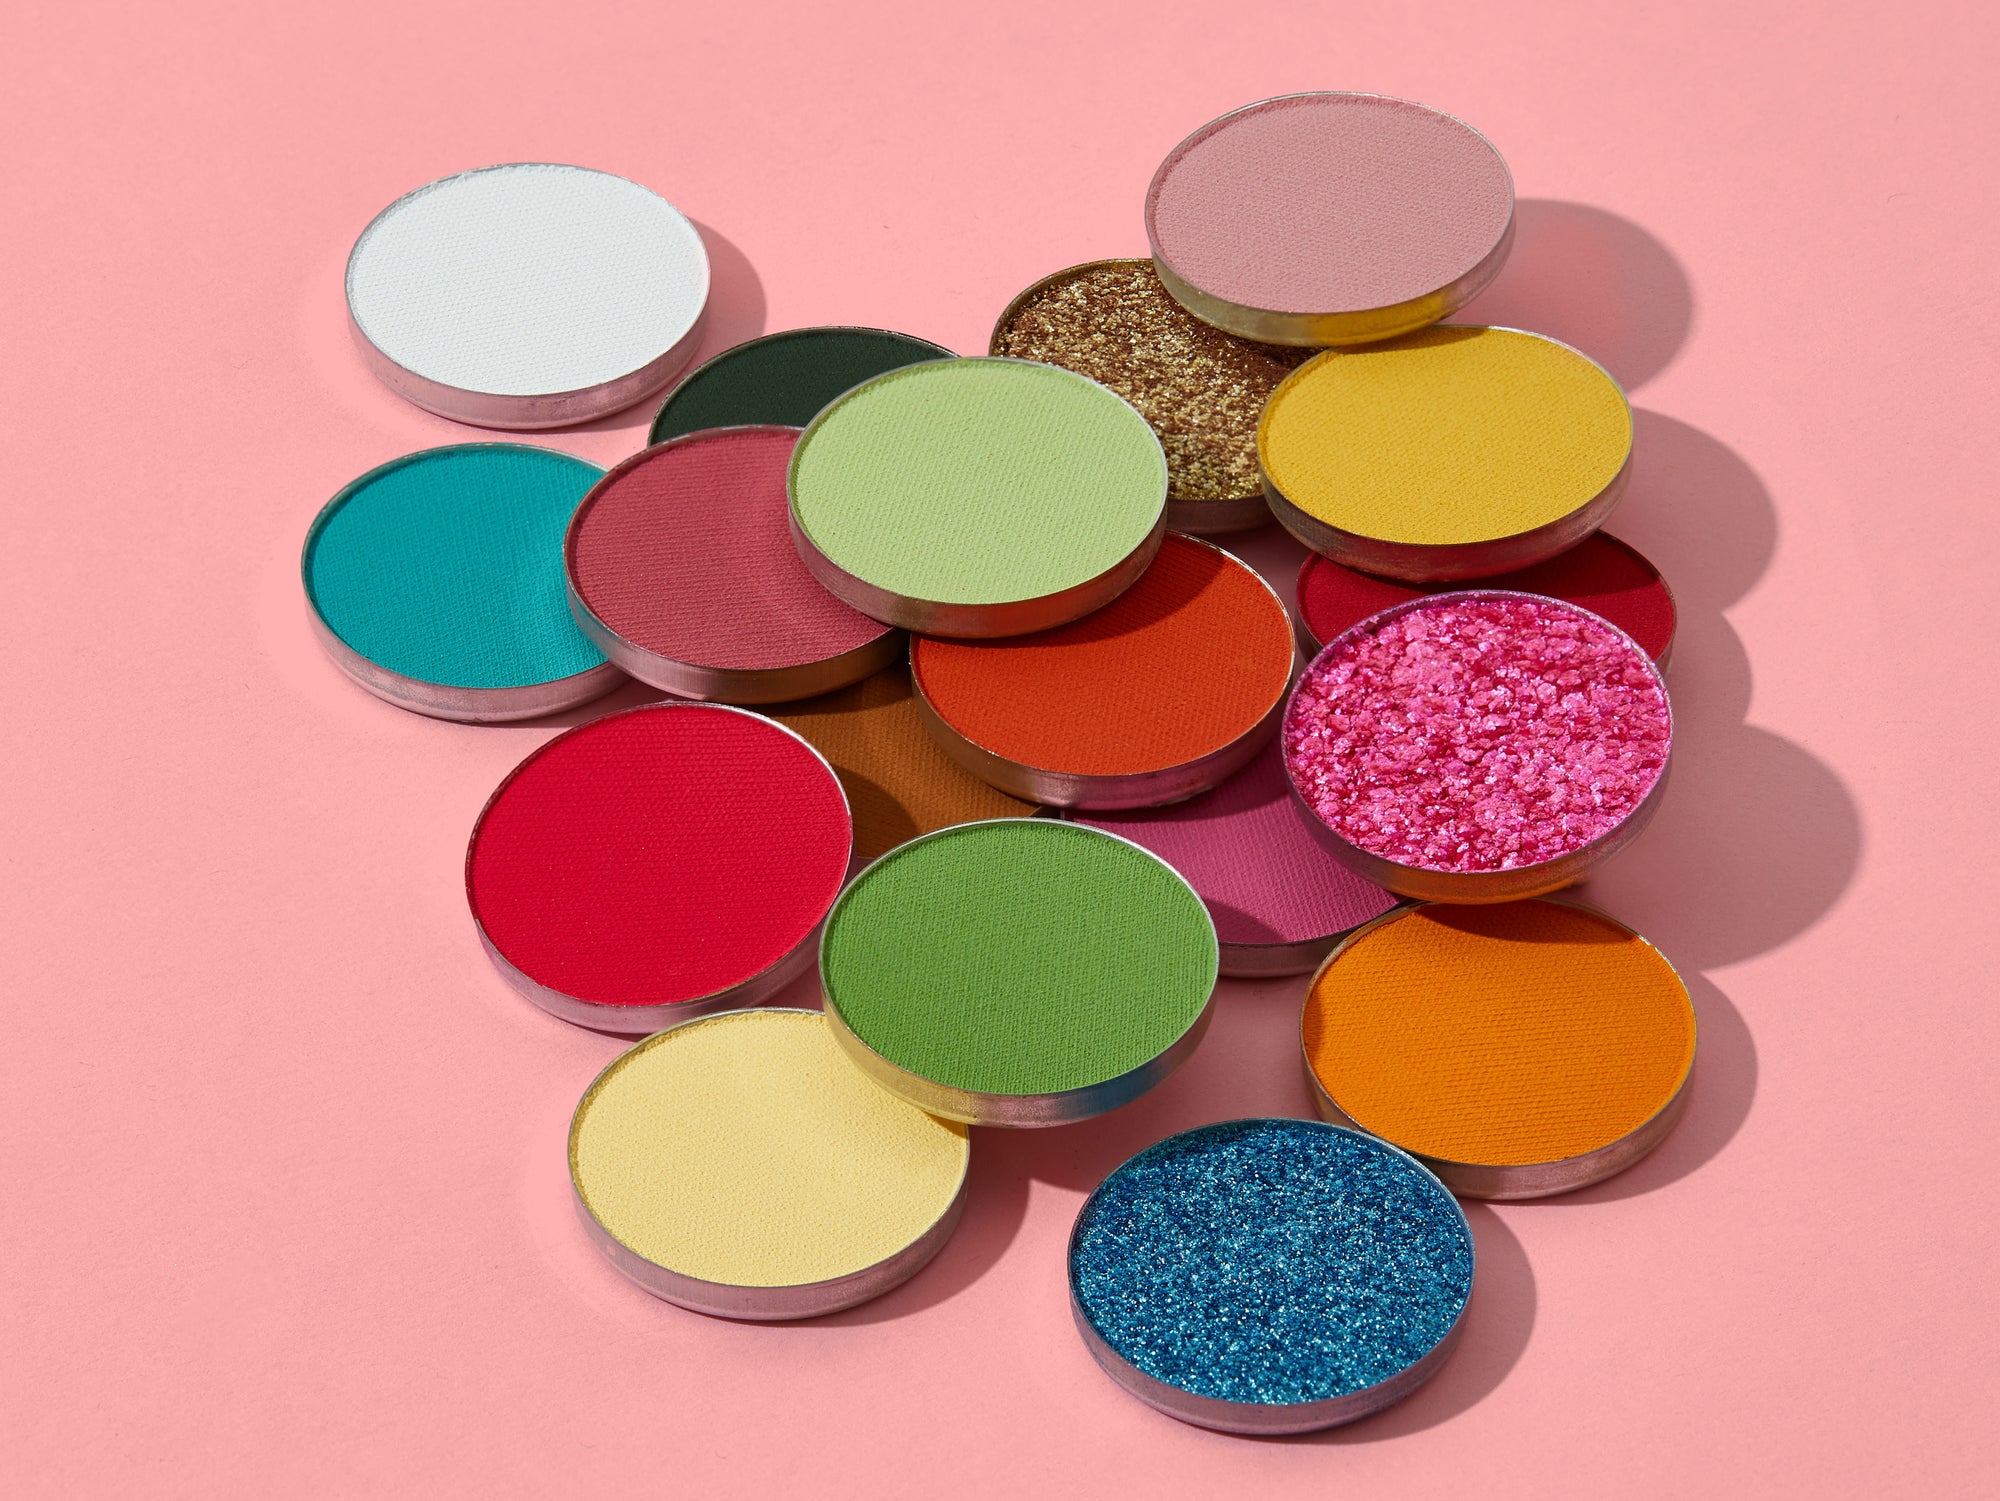 Eyeshadow - A colorful range of pressed single-pan eyeshadow by Coloured Raine Cosmetics